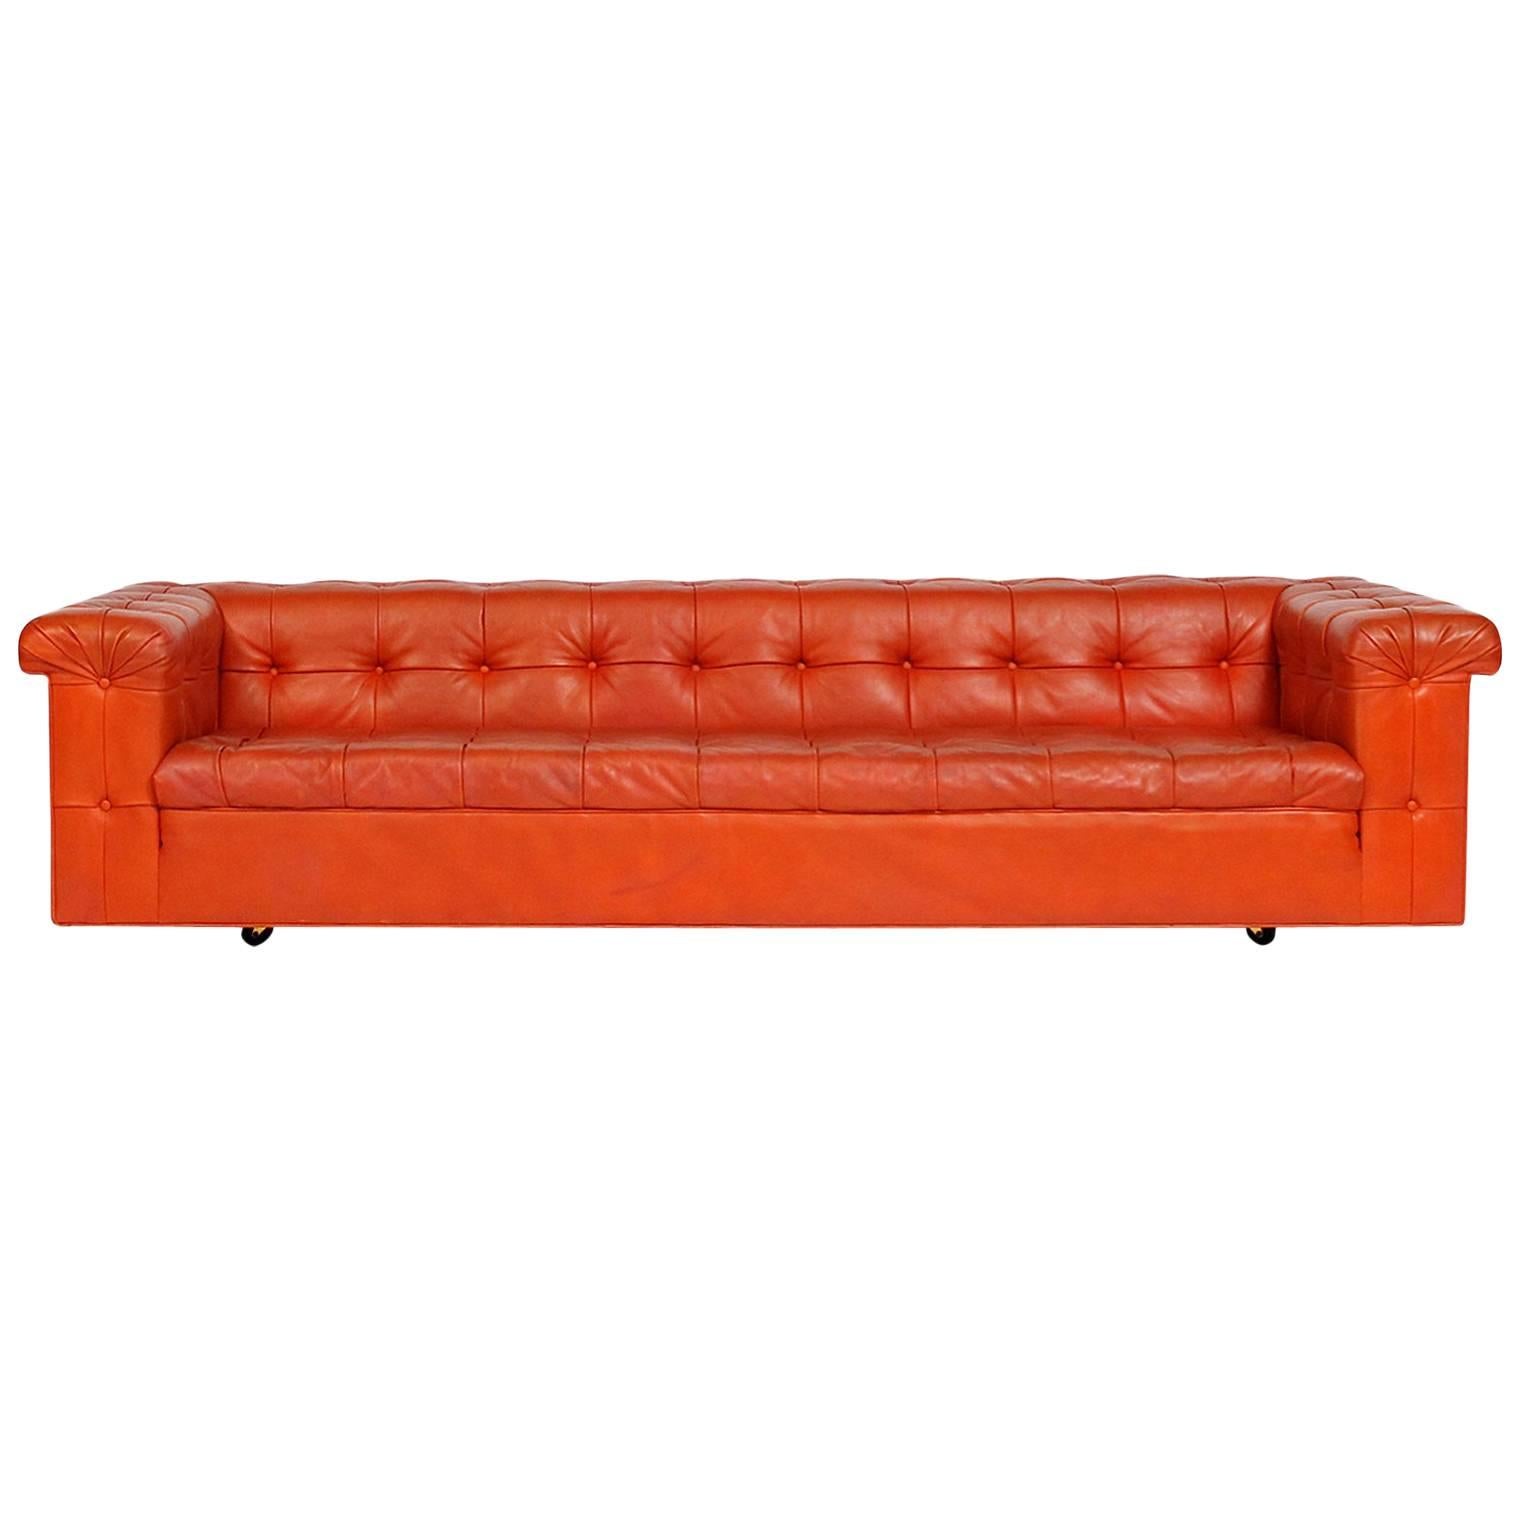 Rare Edward Wormley for Dunbar "Party" Sofa in Original Leather